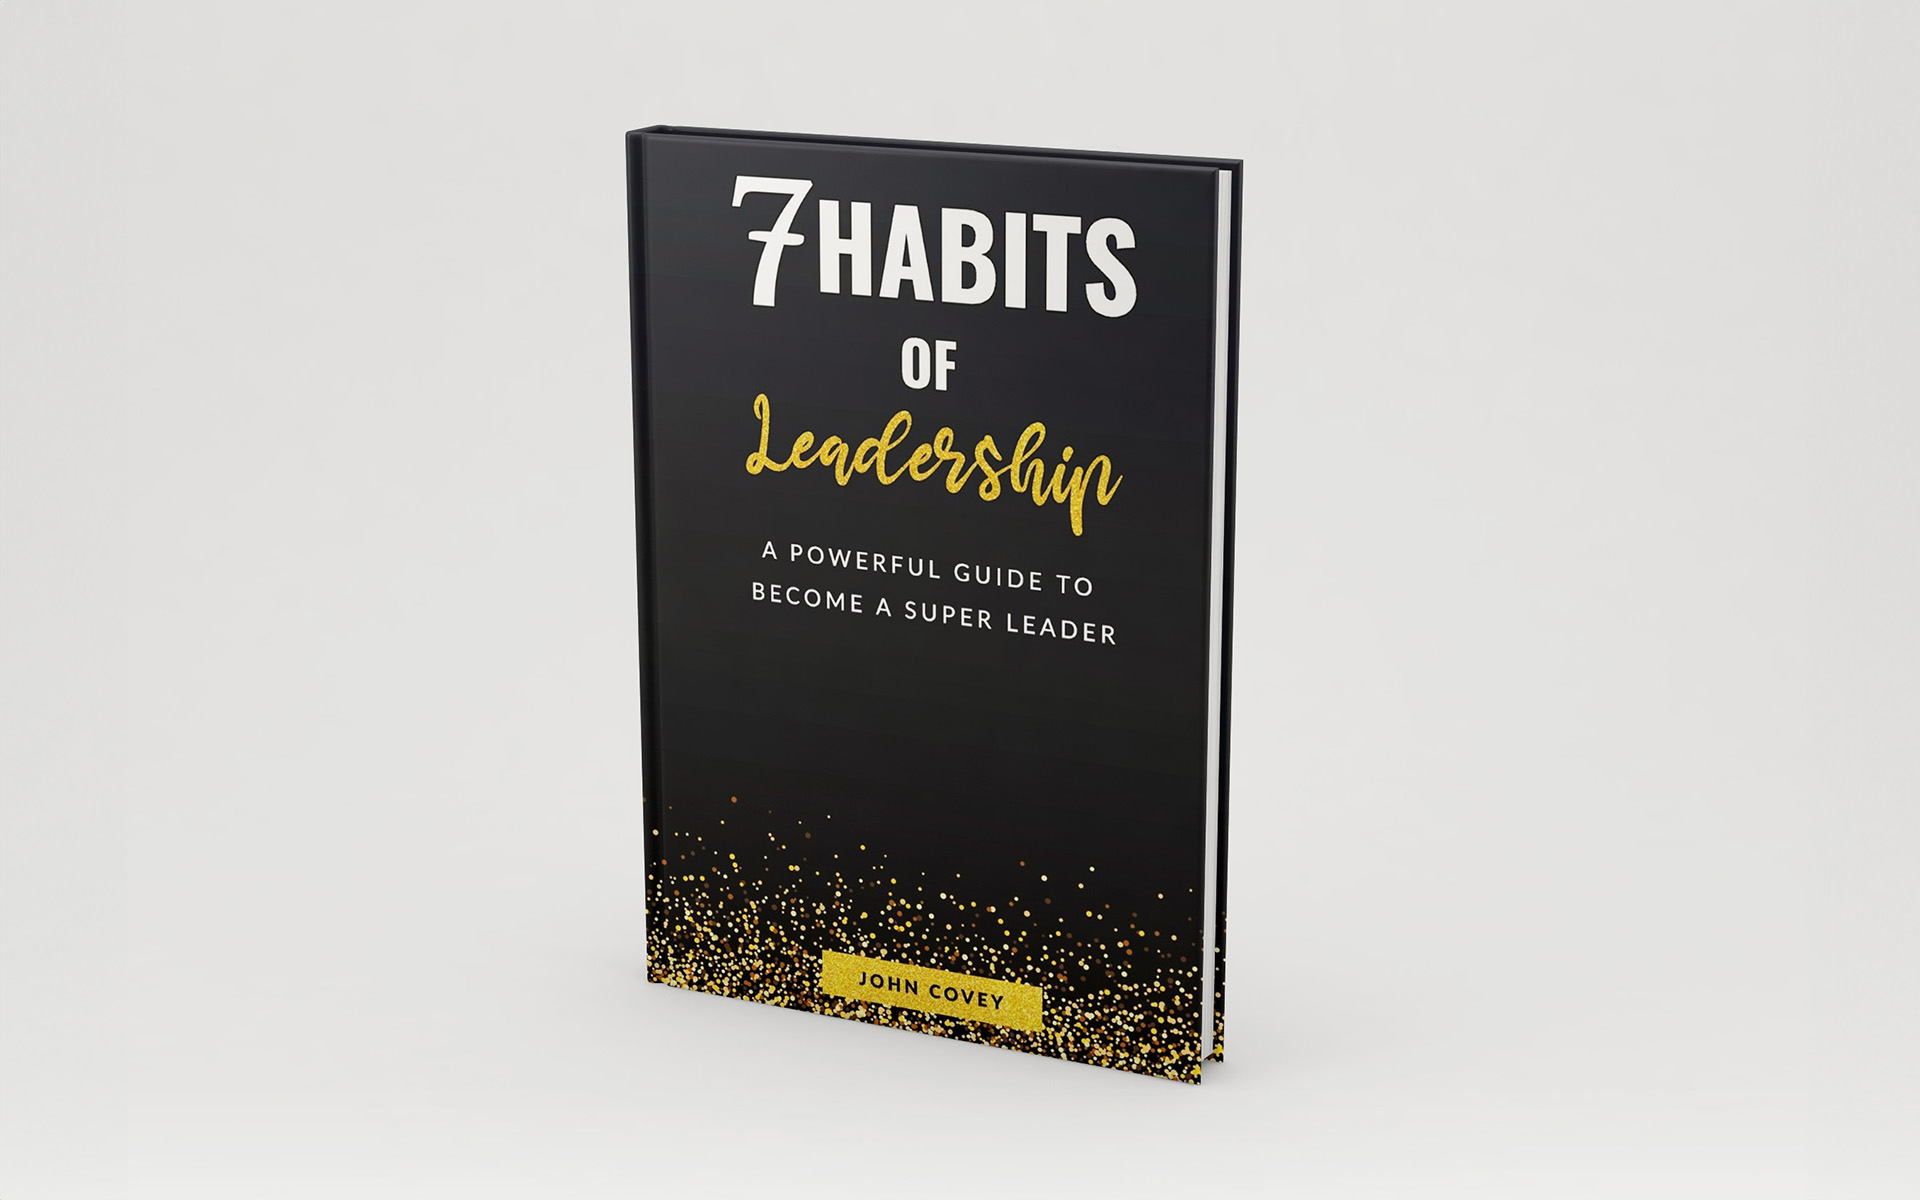 7 Habits of Leadership